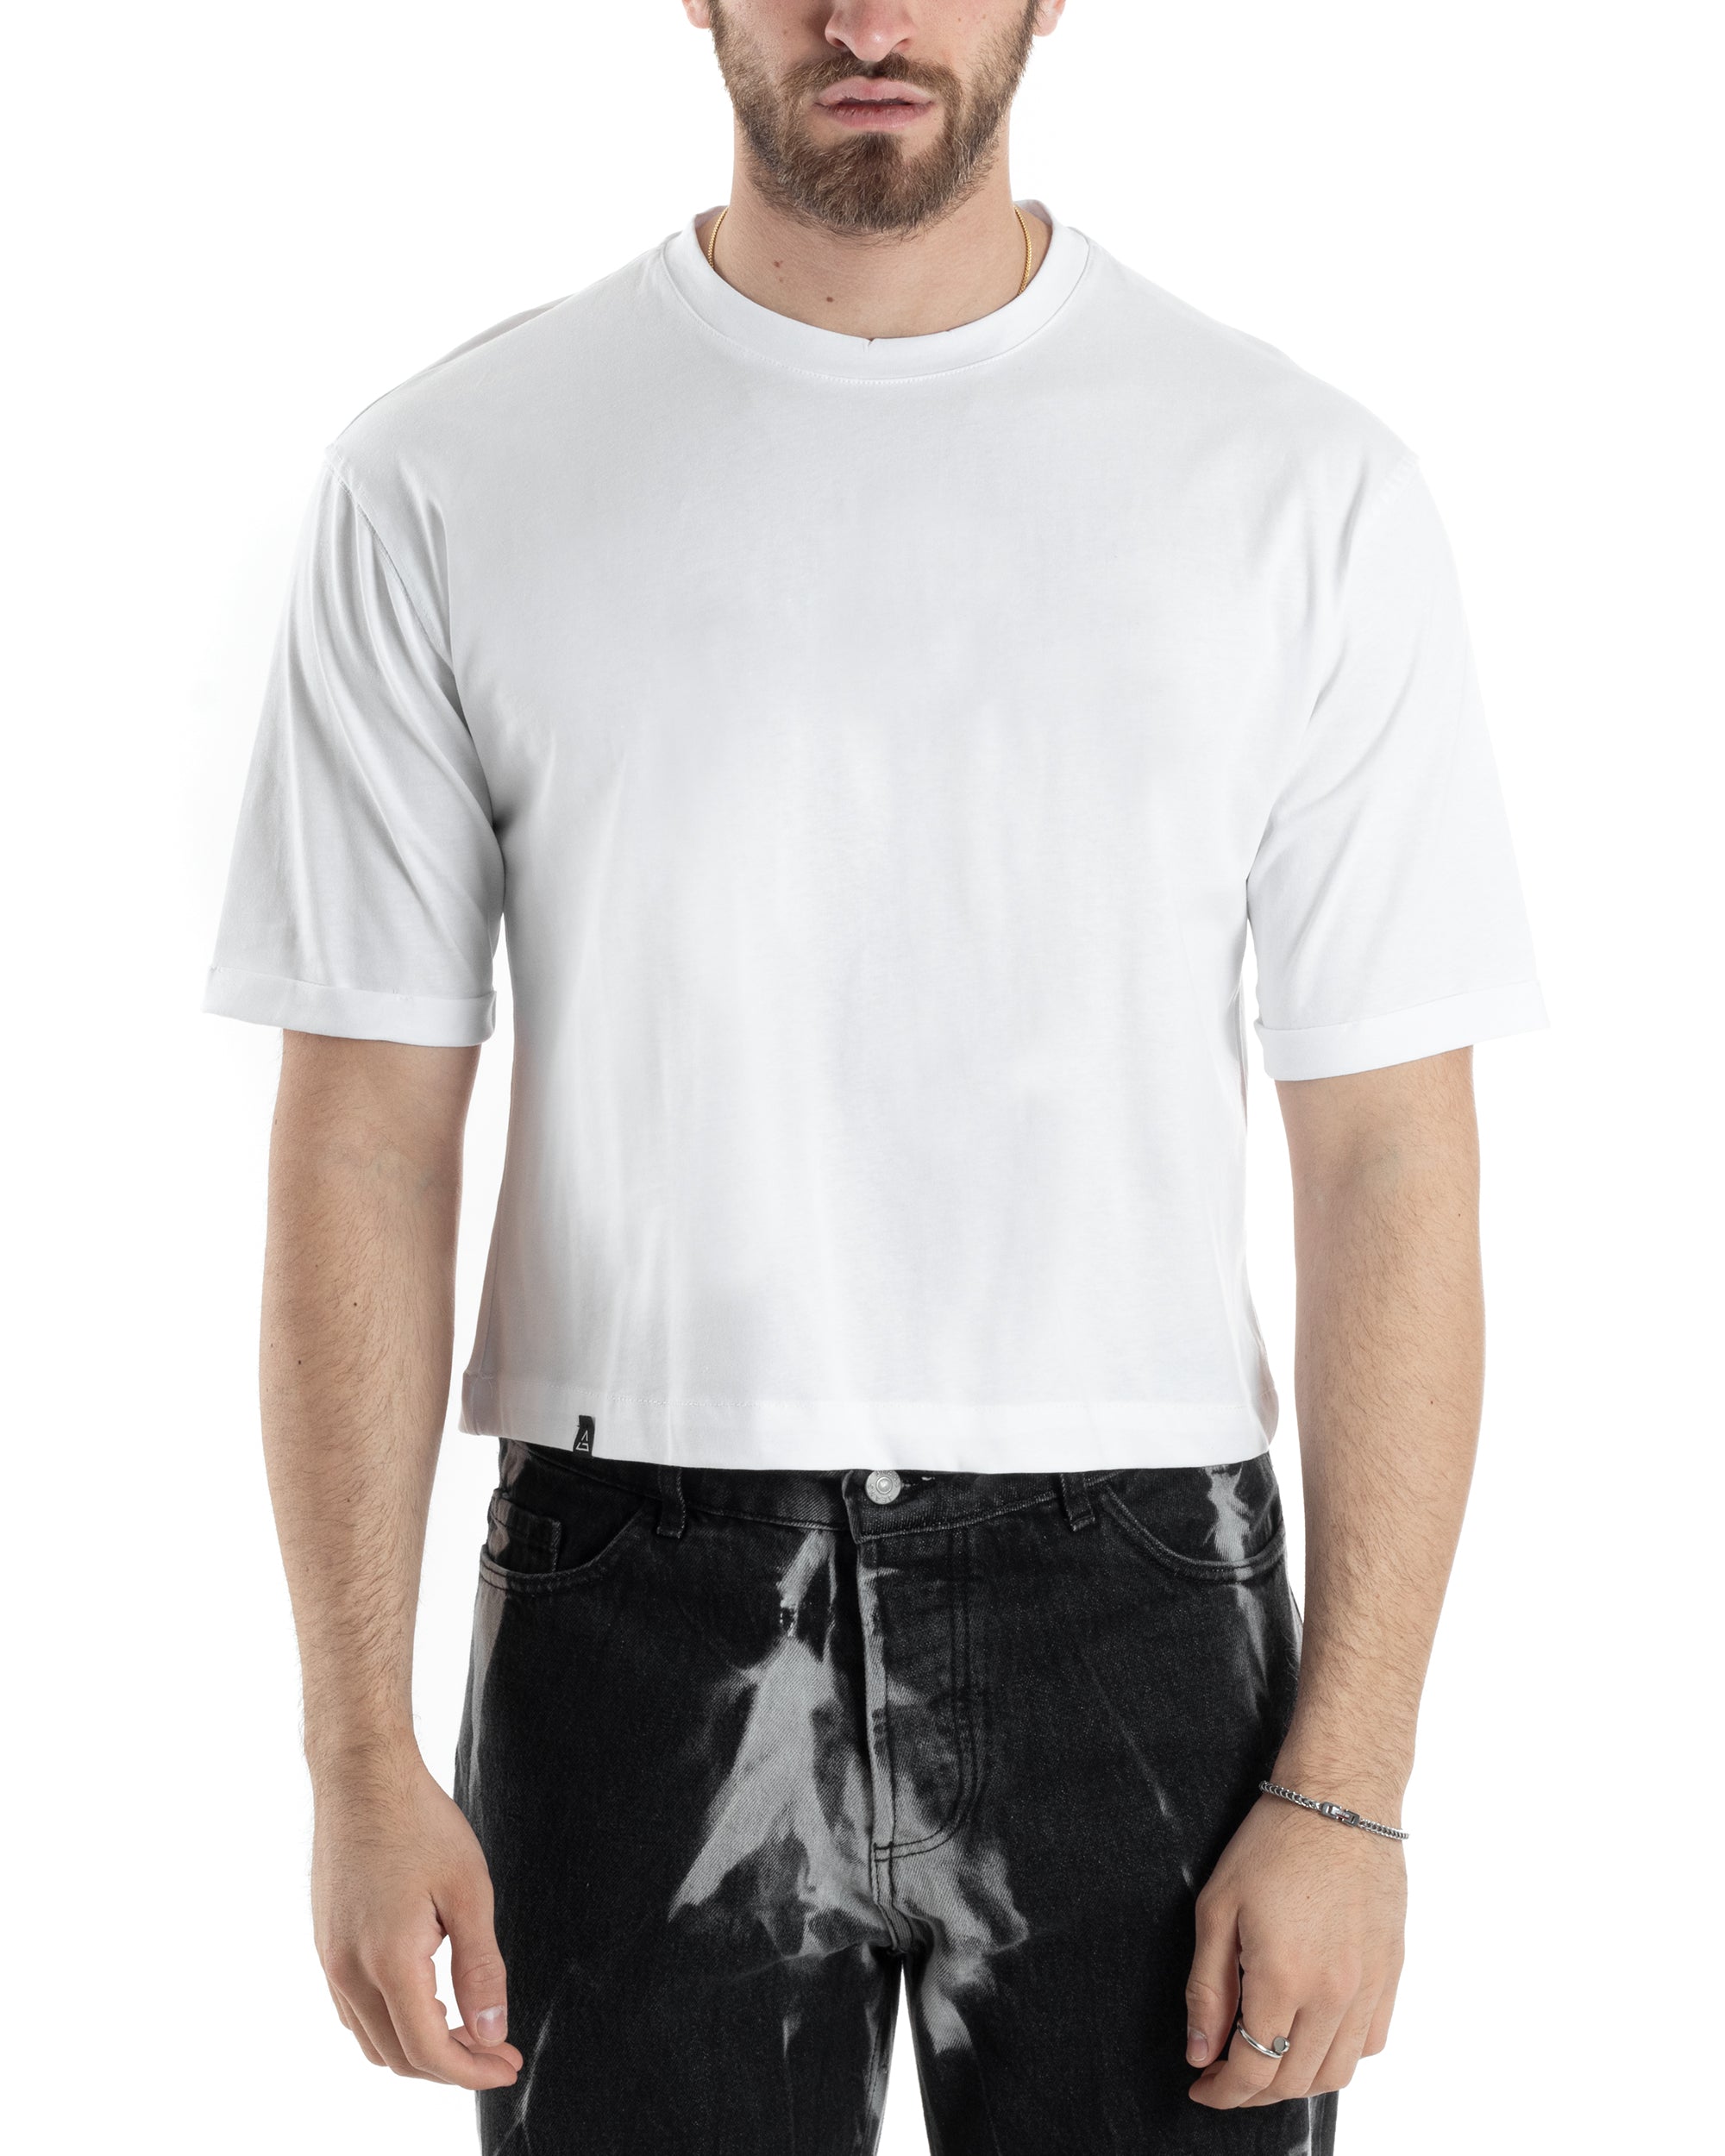 T-shirt Uomo Cropped Corta Boxy Fit Tinta Unita Bianco Casual GIOSAL-TS3004A